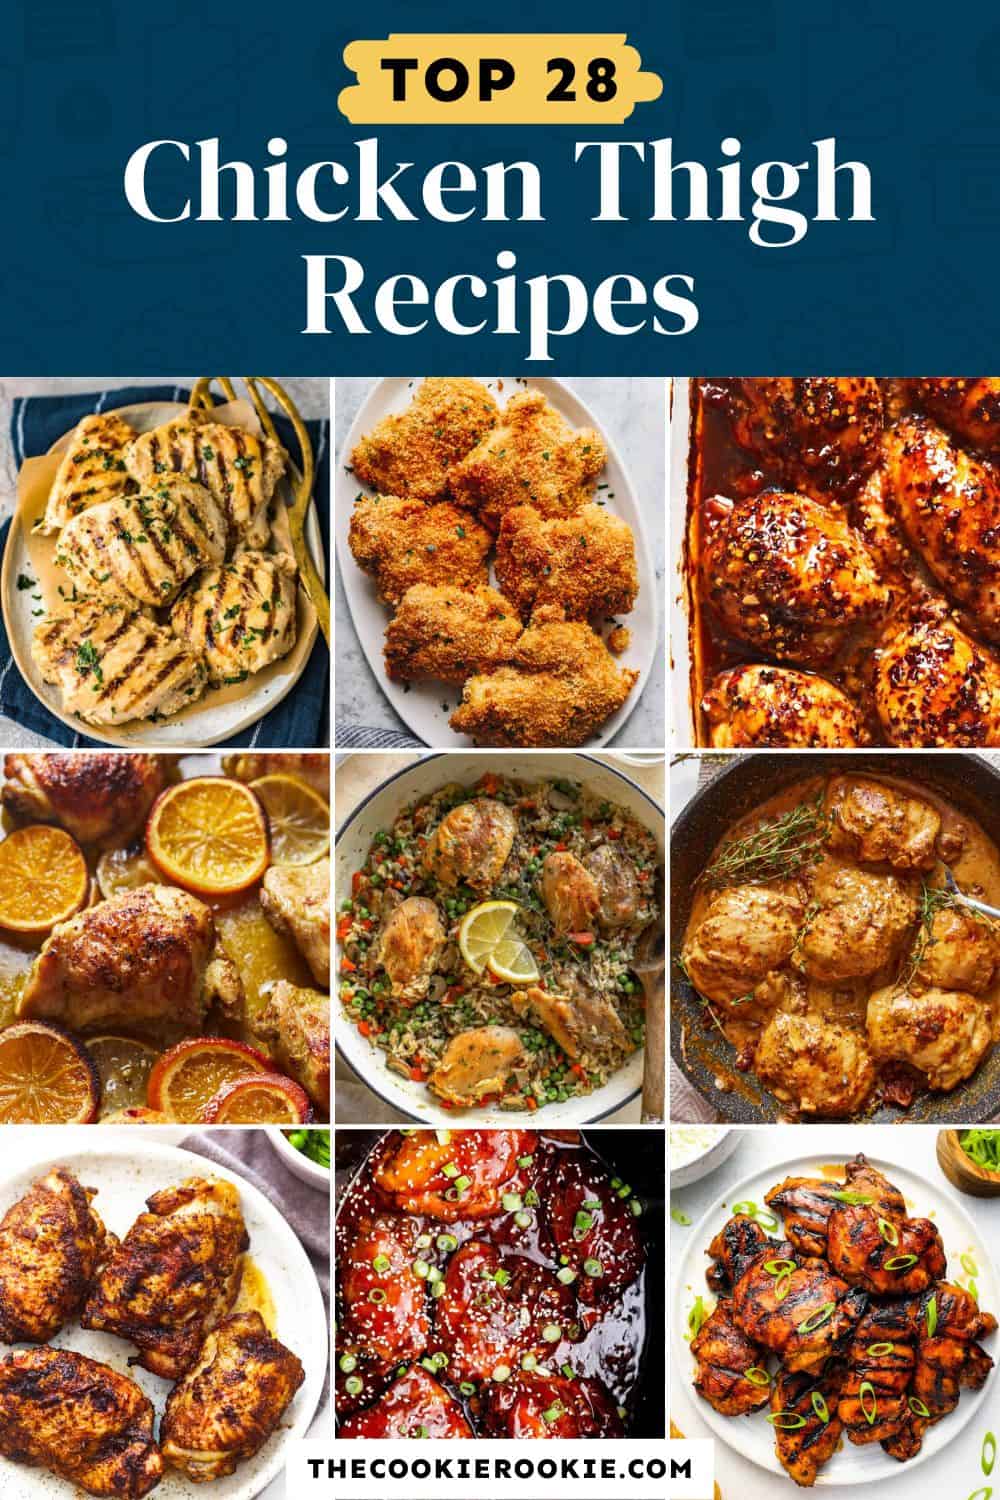 Top 25 chicken thigh recipes.